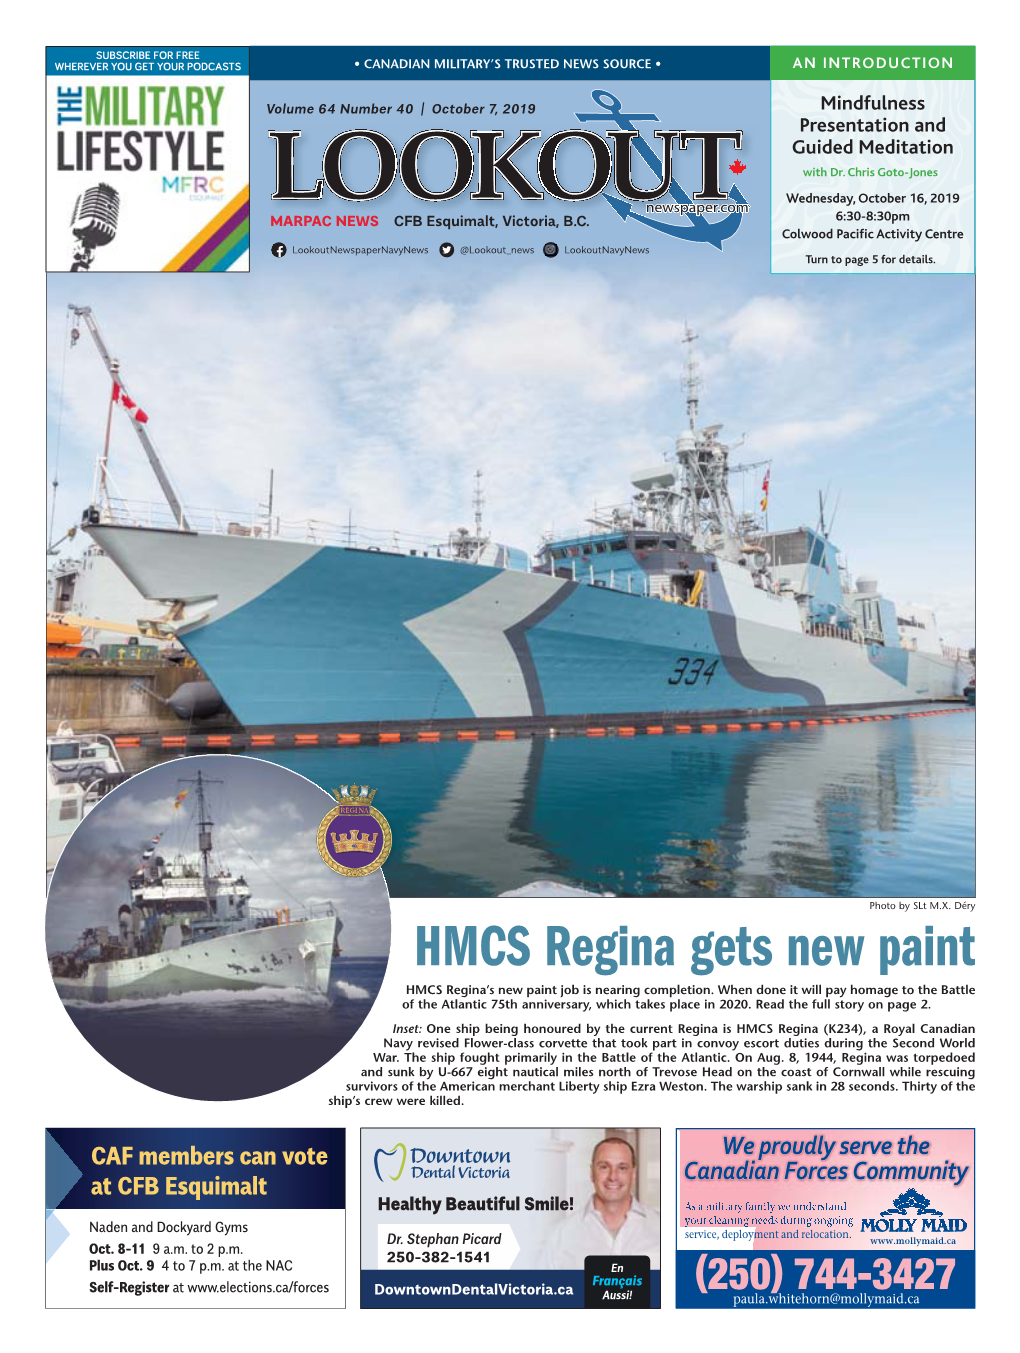 HMCS Regina Gets New Paint HMCS Regina’S New Paint Job Is Nearing Completion